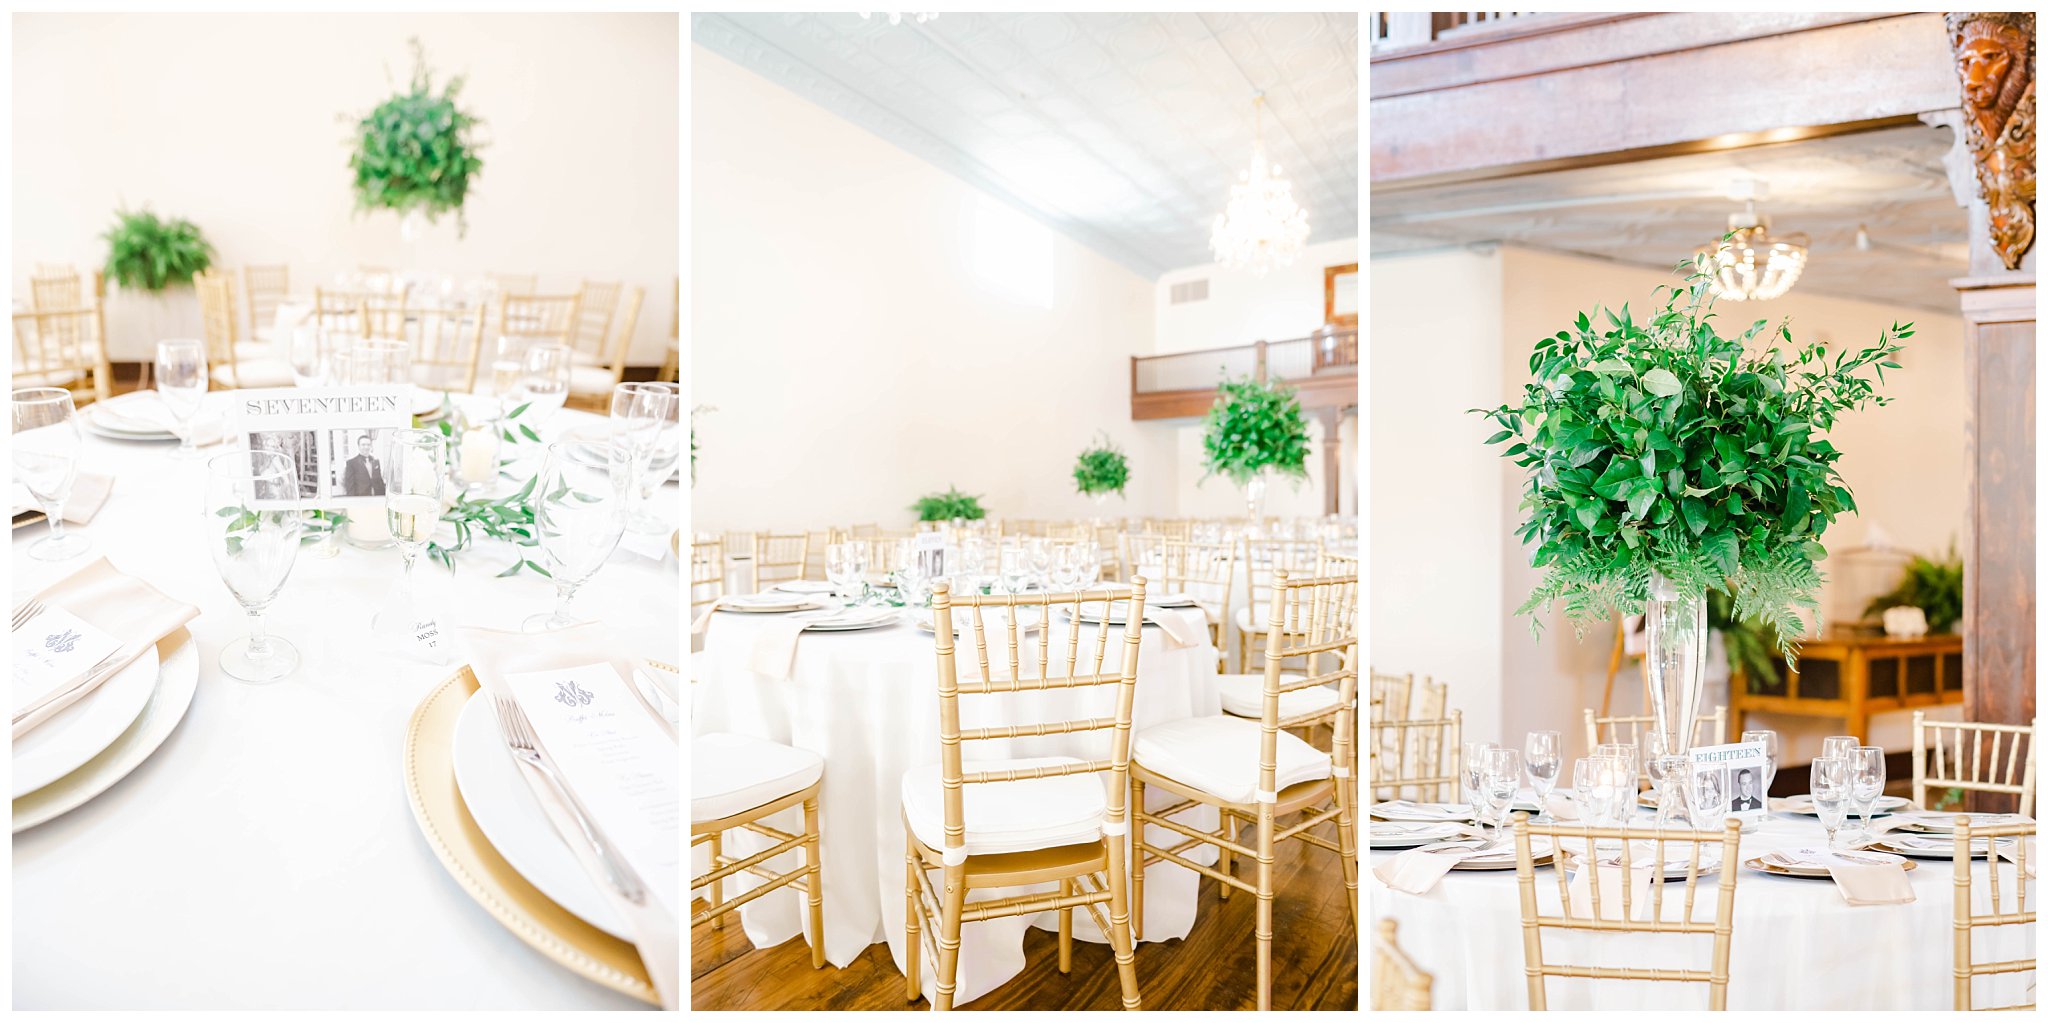 reception details inside historic building for a North Carolina summer wedding